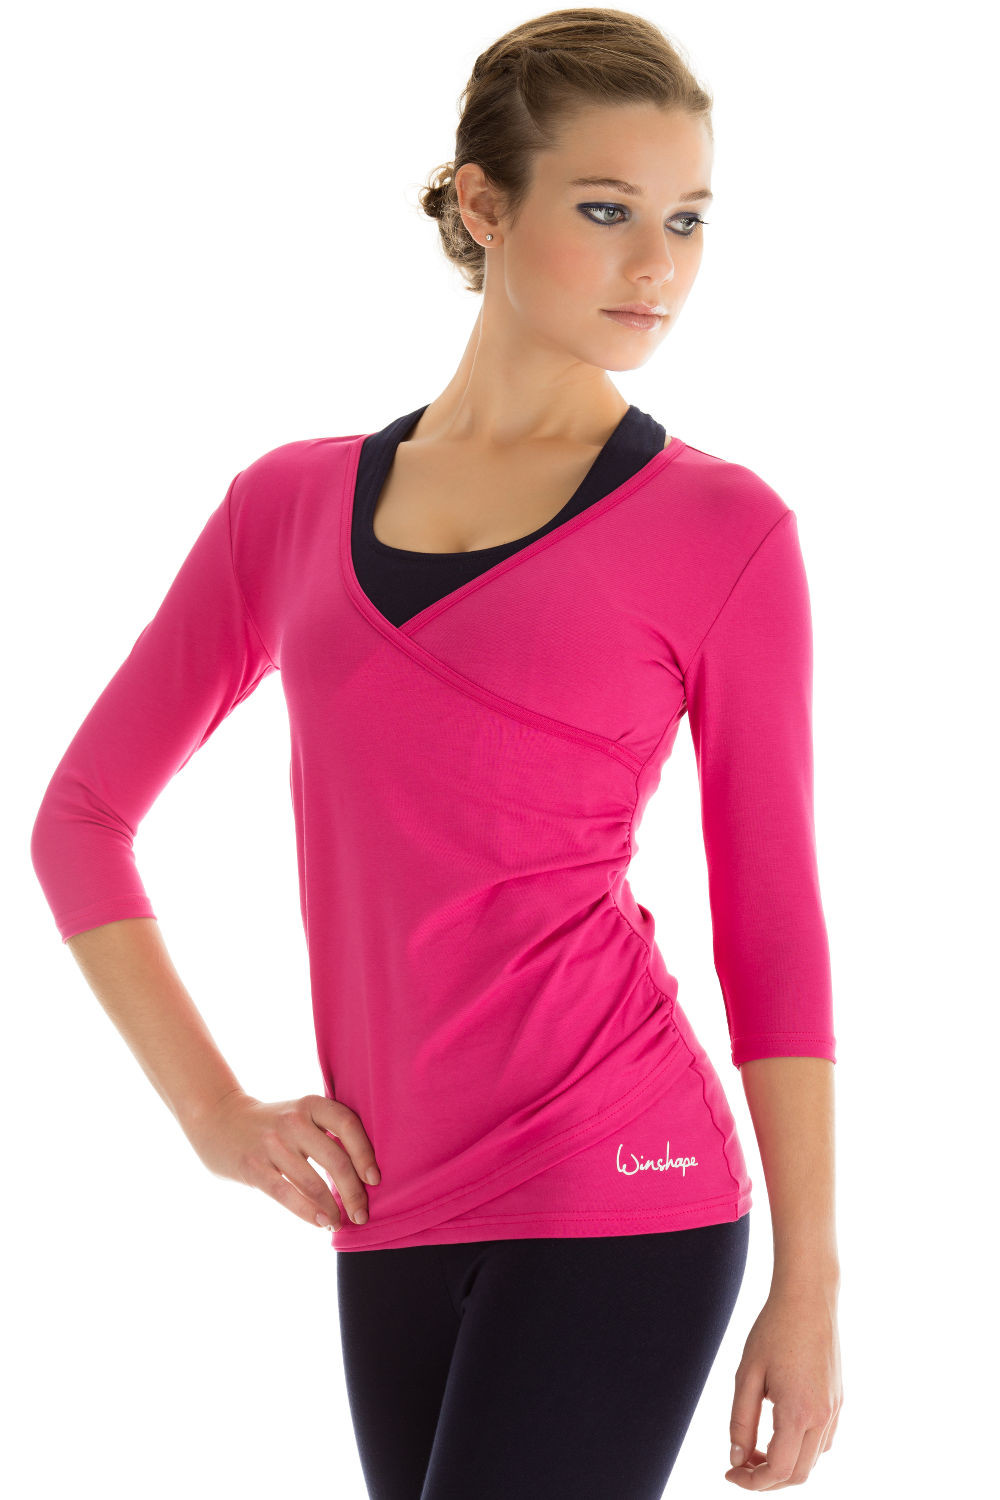 ¾-Arm Shirt in Wickeloptik WS3, pink, Winshape Flow Style